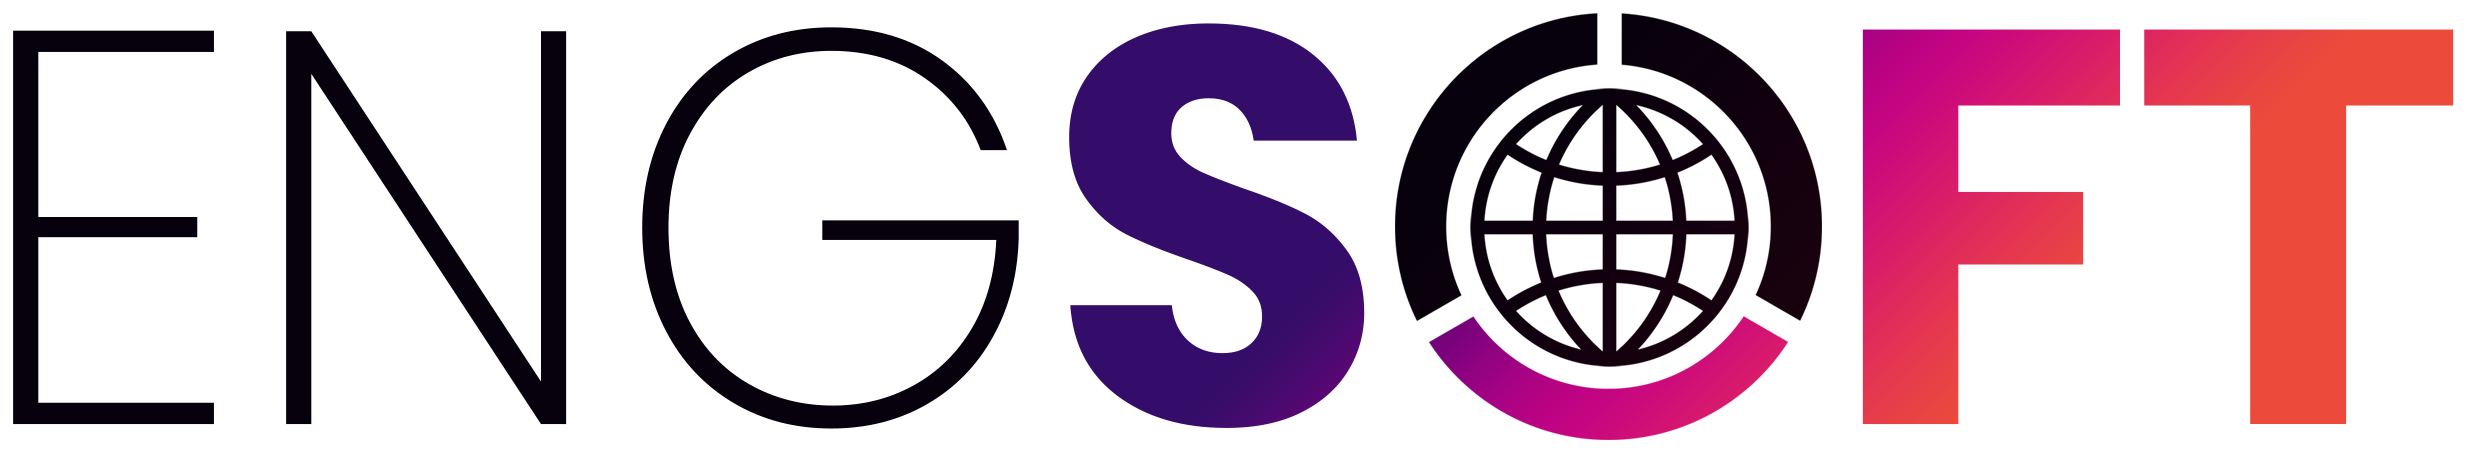 engsoft_purple_logo